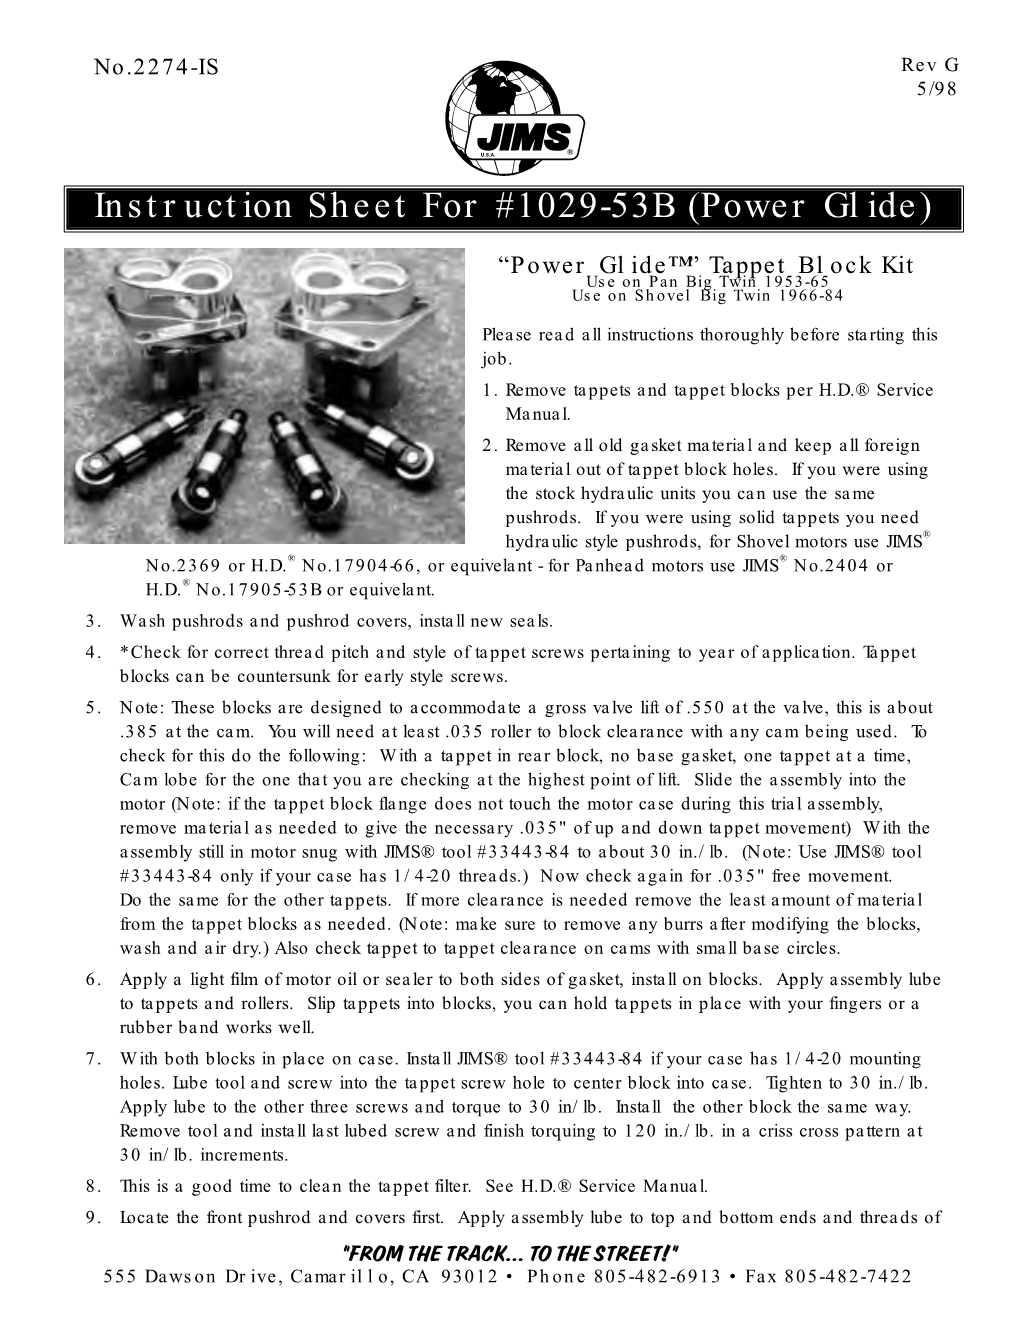 Instruction Sheet for #1029-53B (Power Glide)